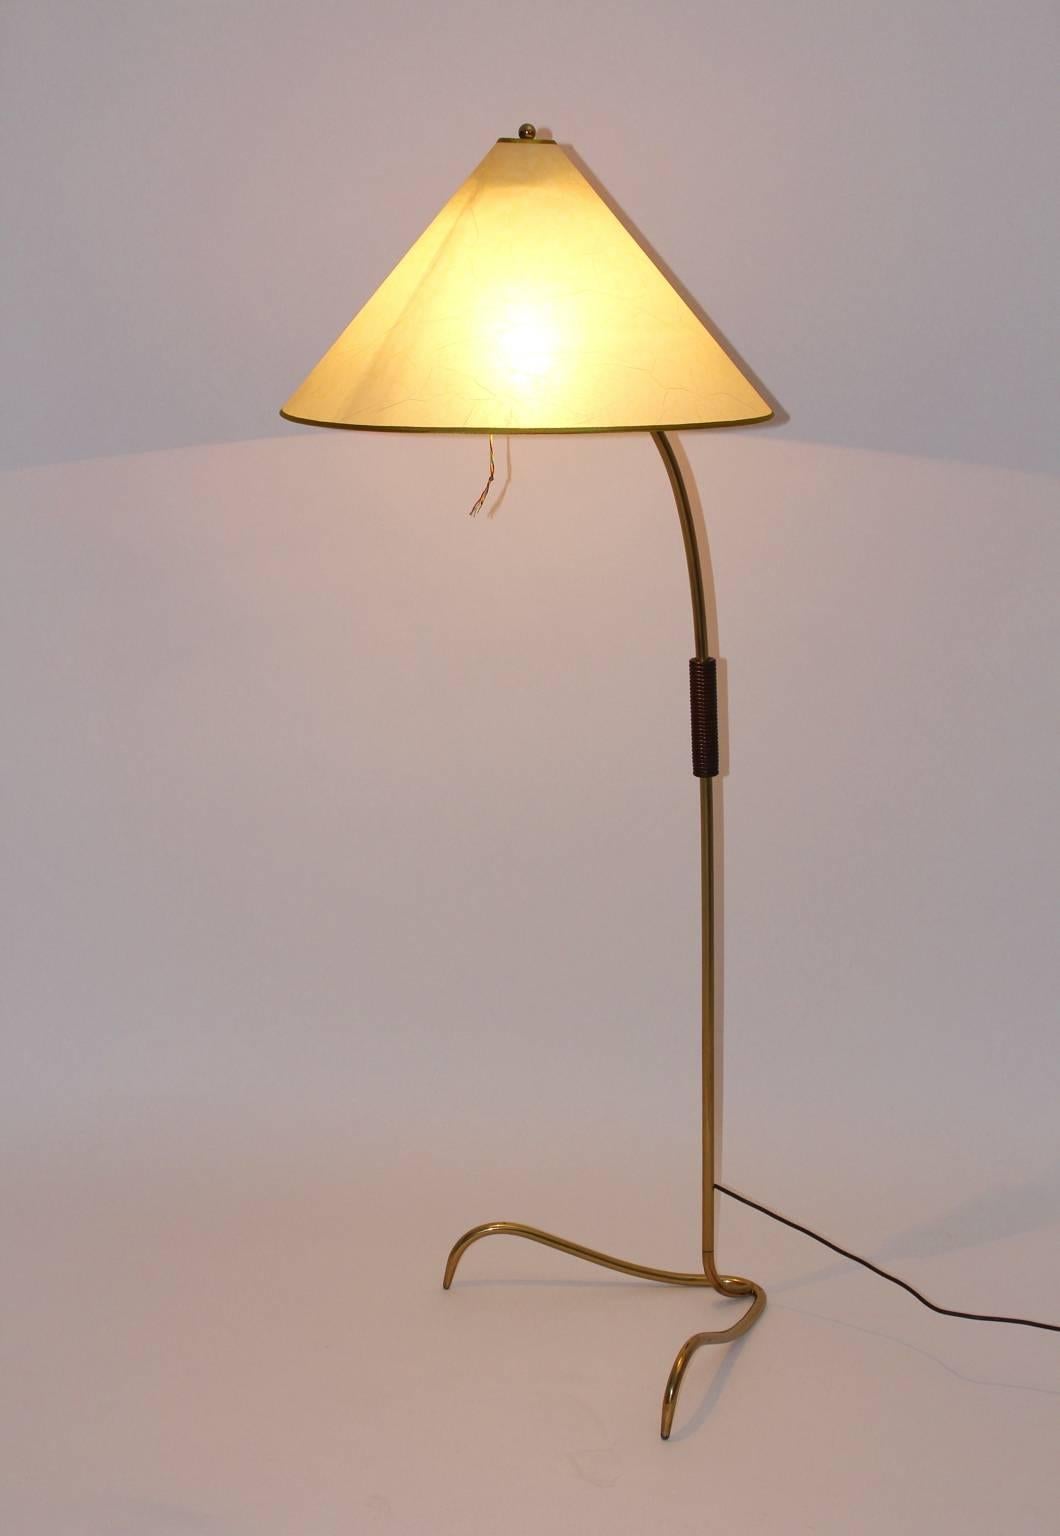 Austrian Mid-Century Modern Floor Lamp Attributed to Kalmar 1950s Vienna